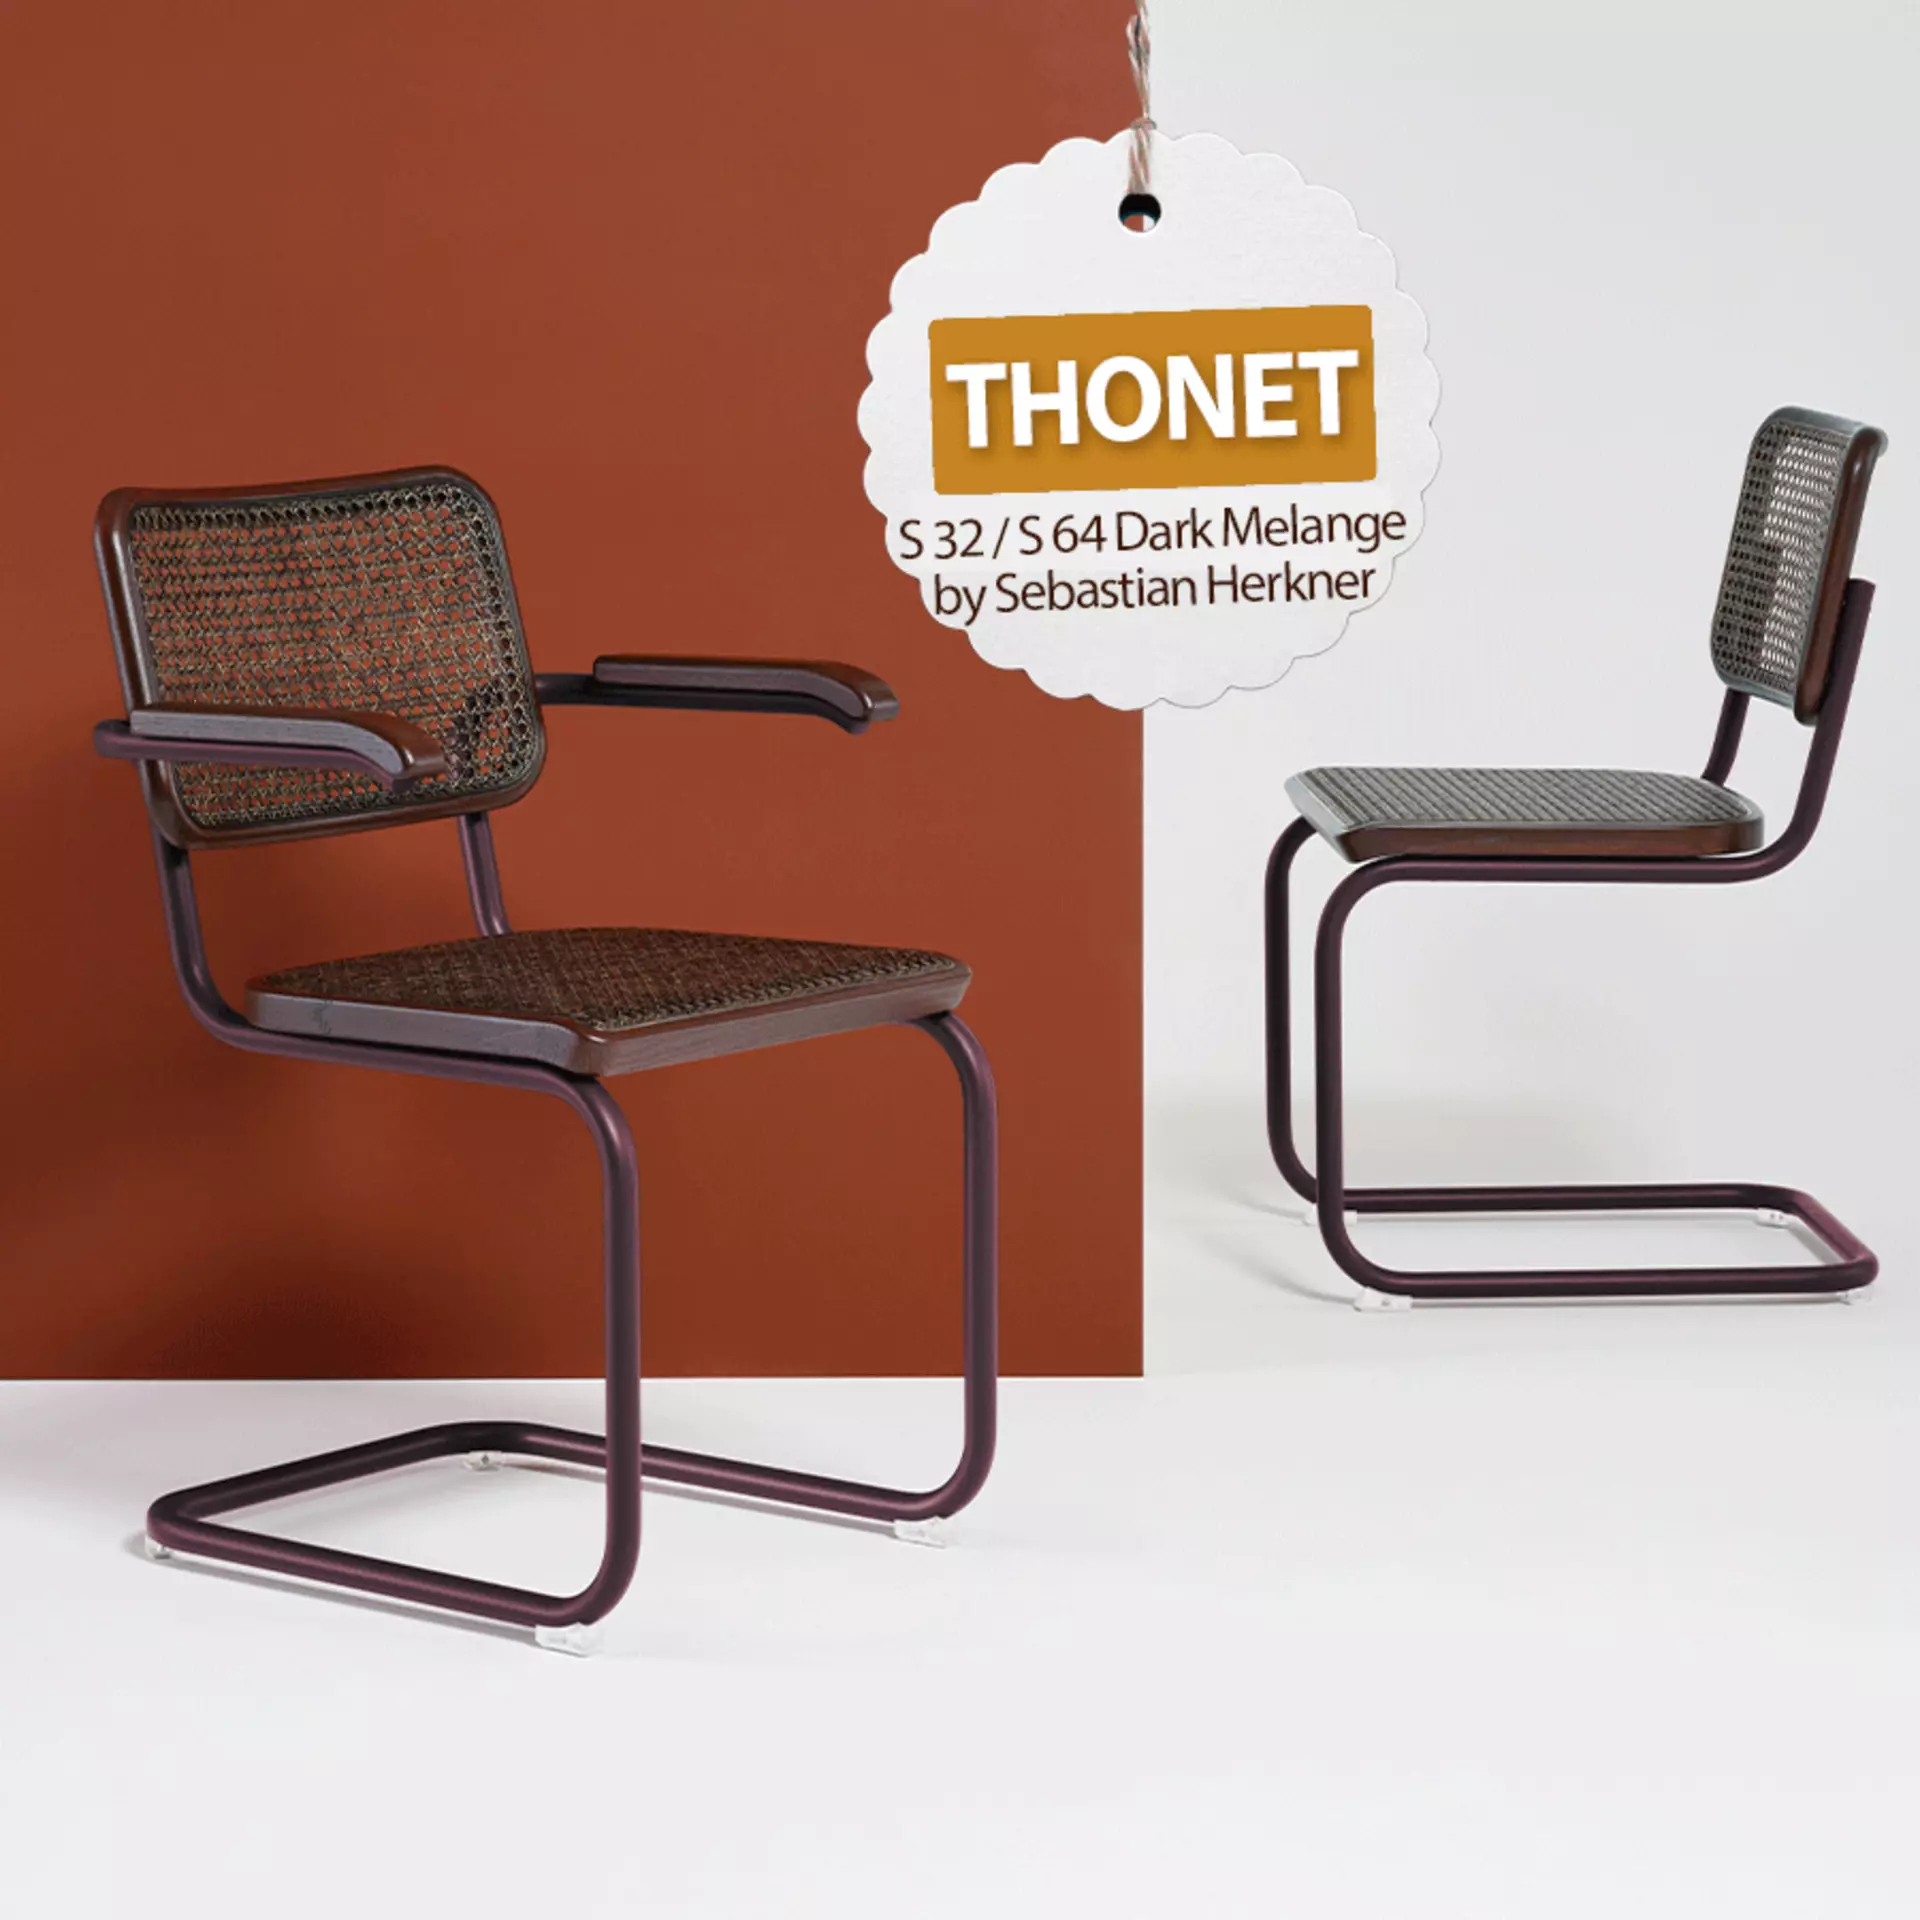 Rethinking Classics - THONET Stuhlikonen in neuem Farbdesign bei interni by inhofer entdecken